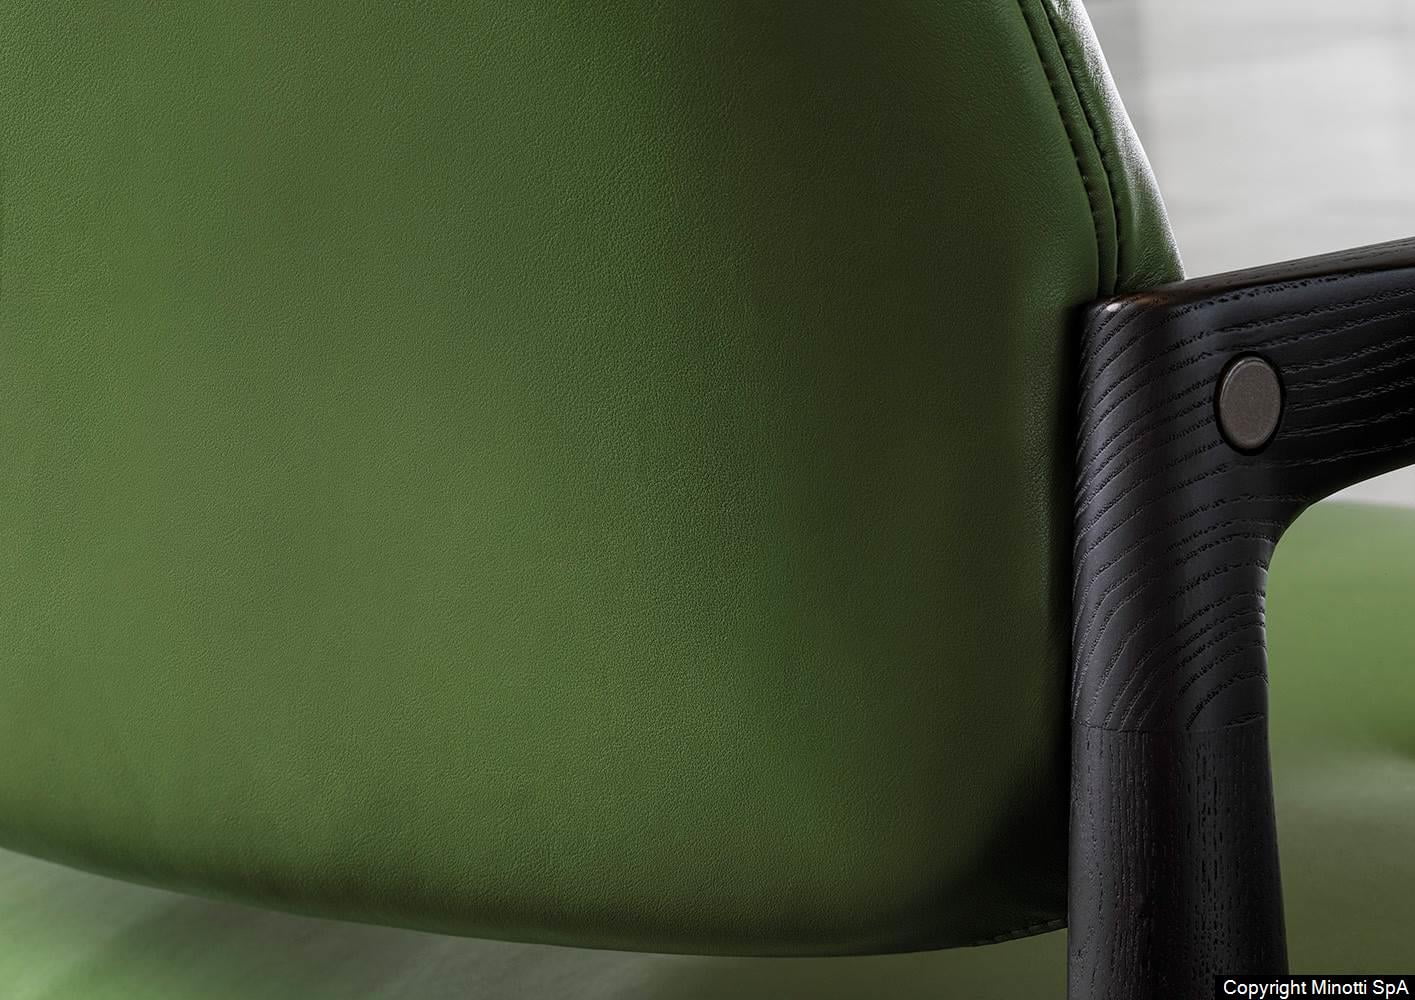 Minotti Yoko fauteuil detailfoto groen lederen kussens, zwart essenhouten frame